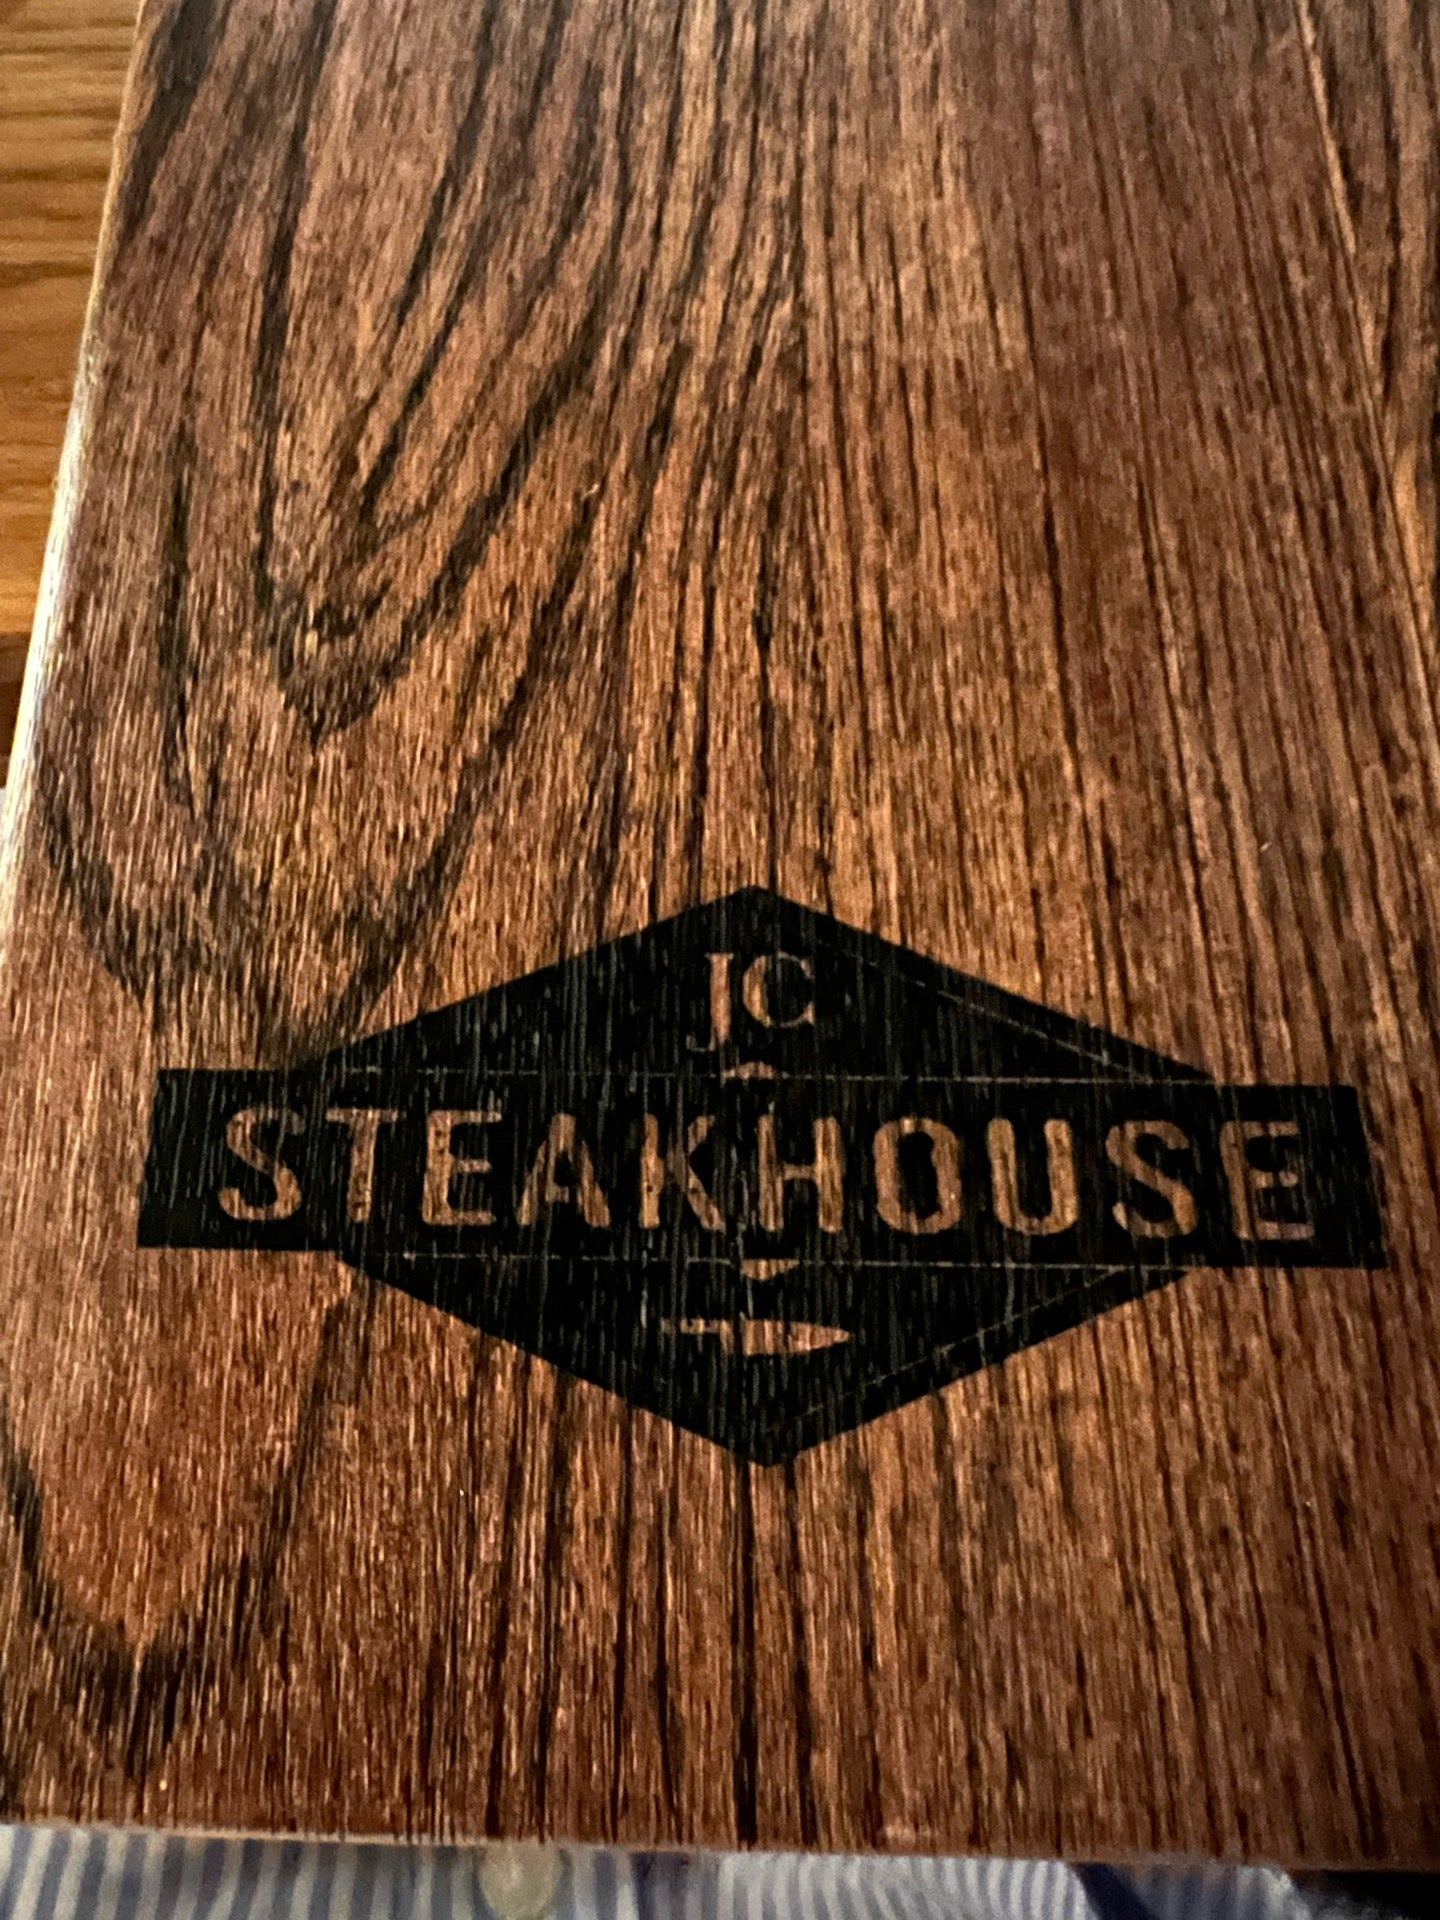 Jc Steakhouse